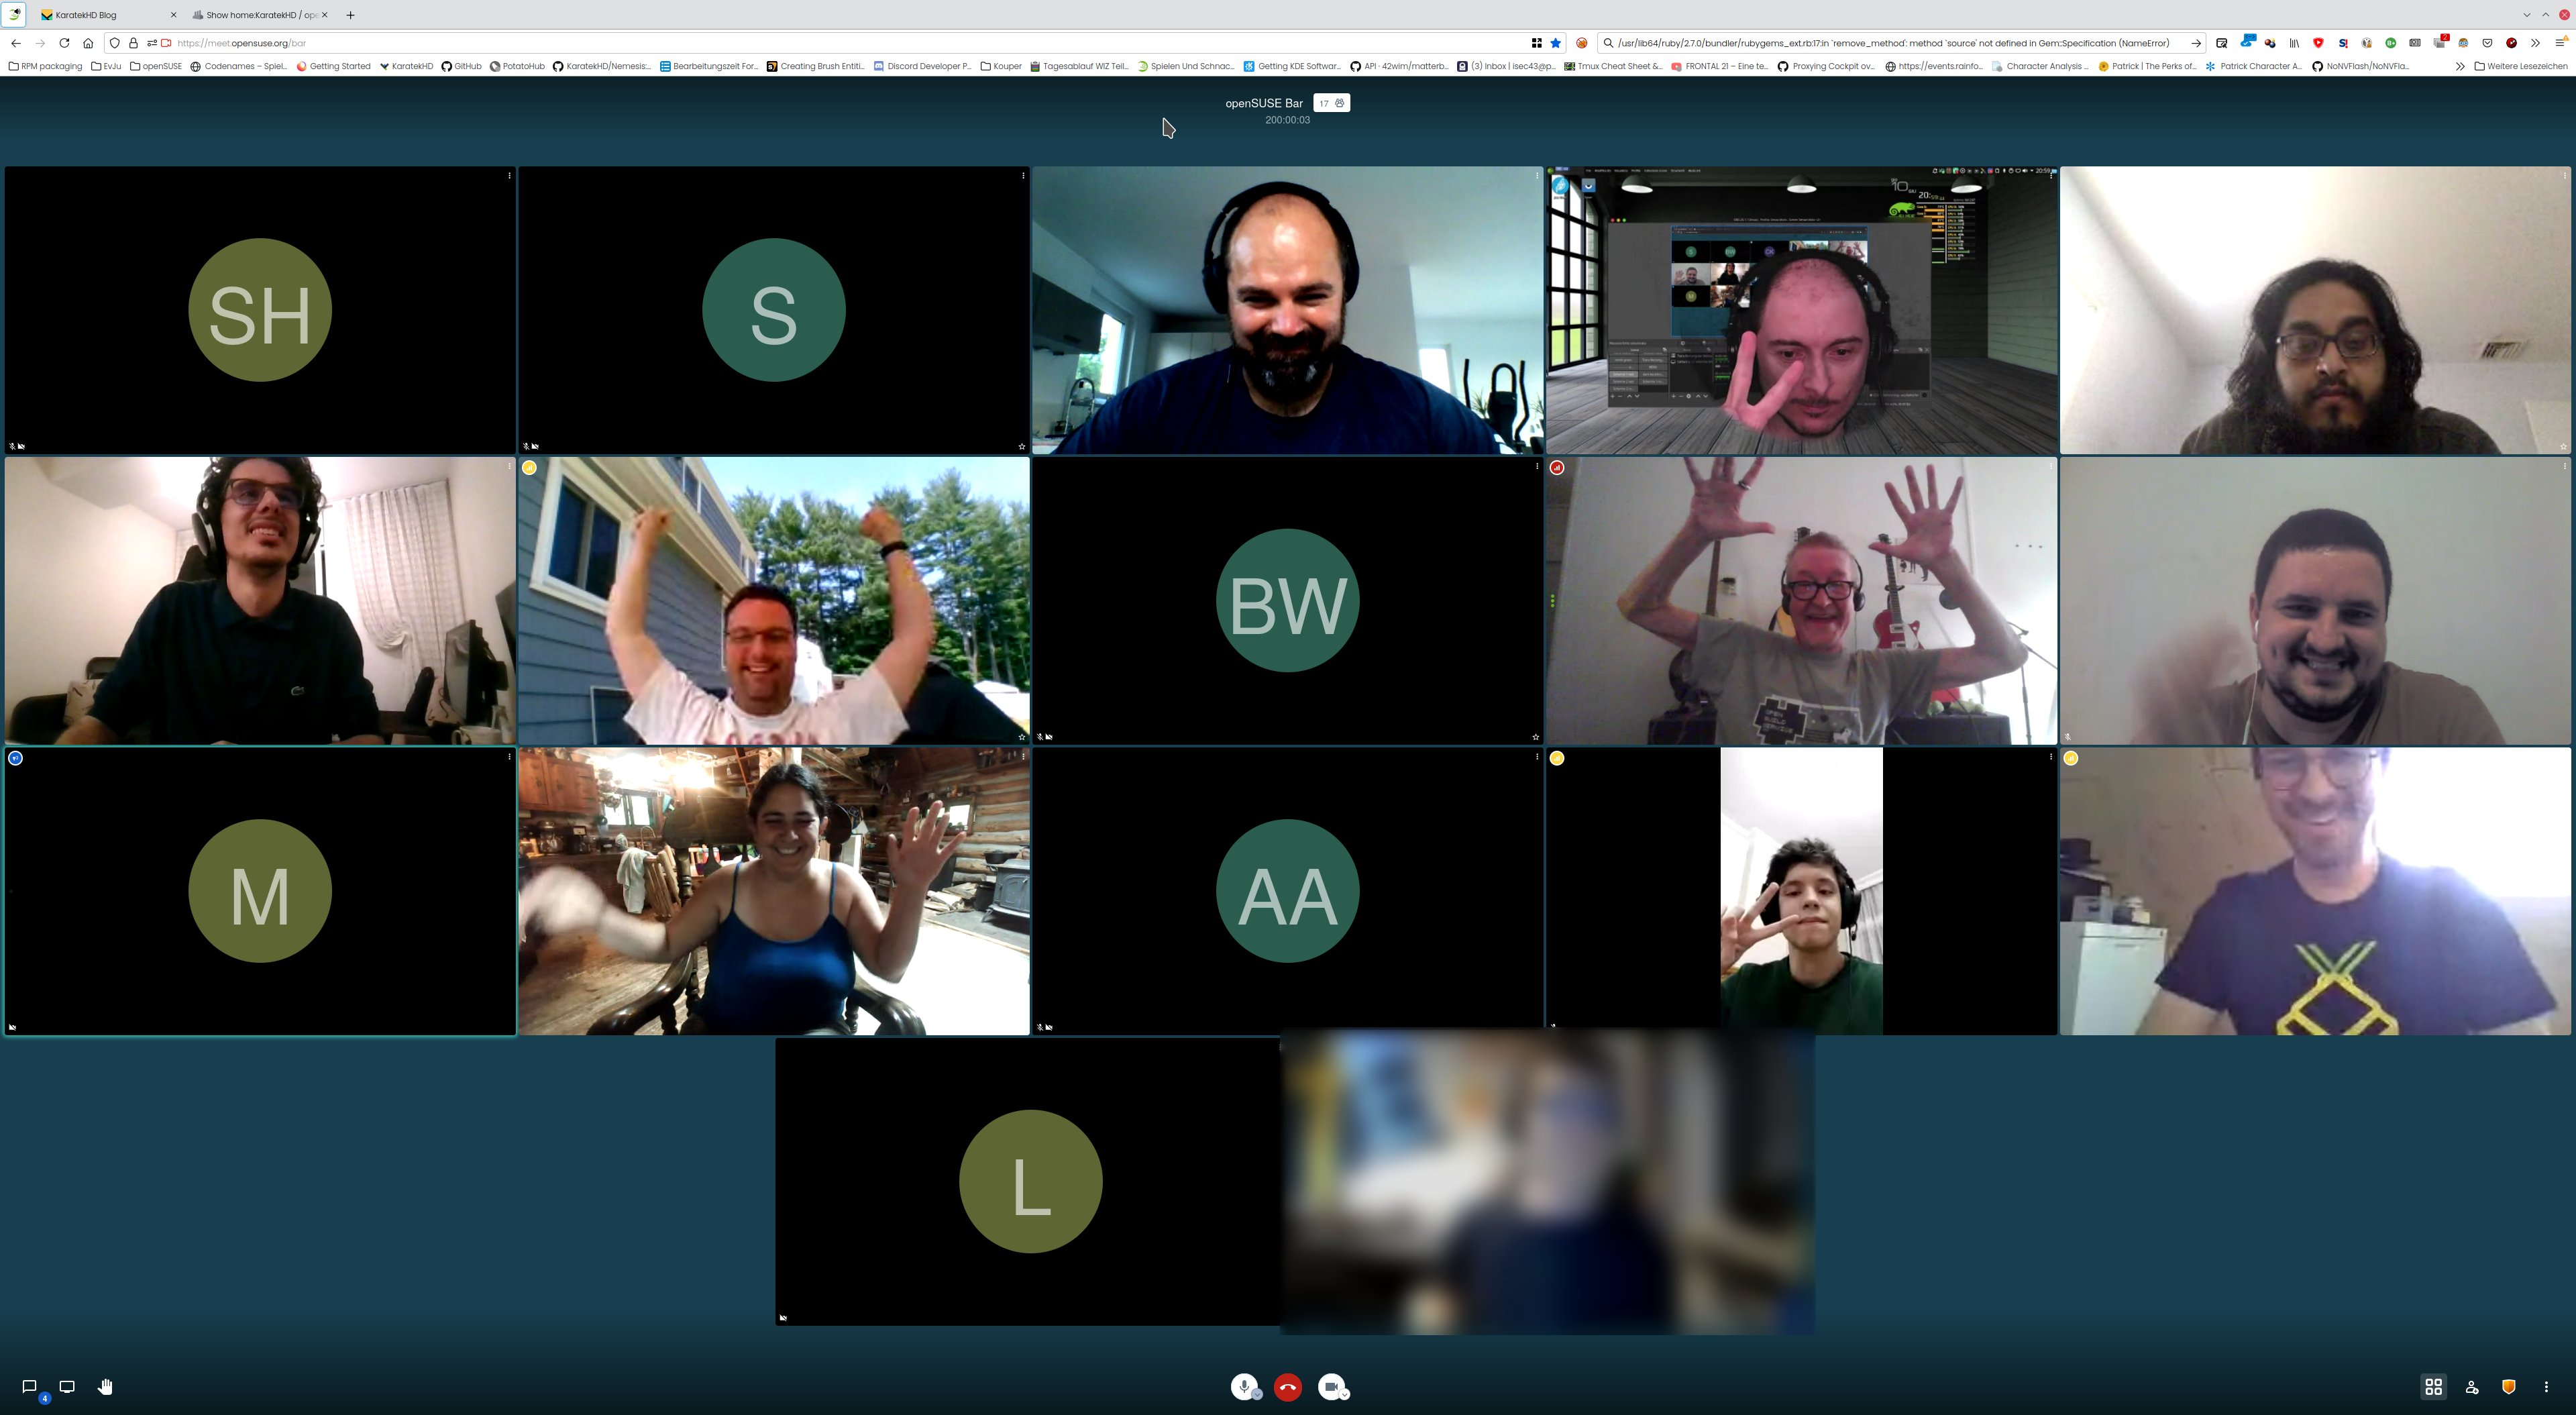 openSUSE Community Plans Virtual Bar Anniversary